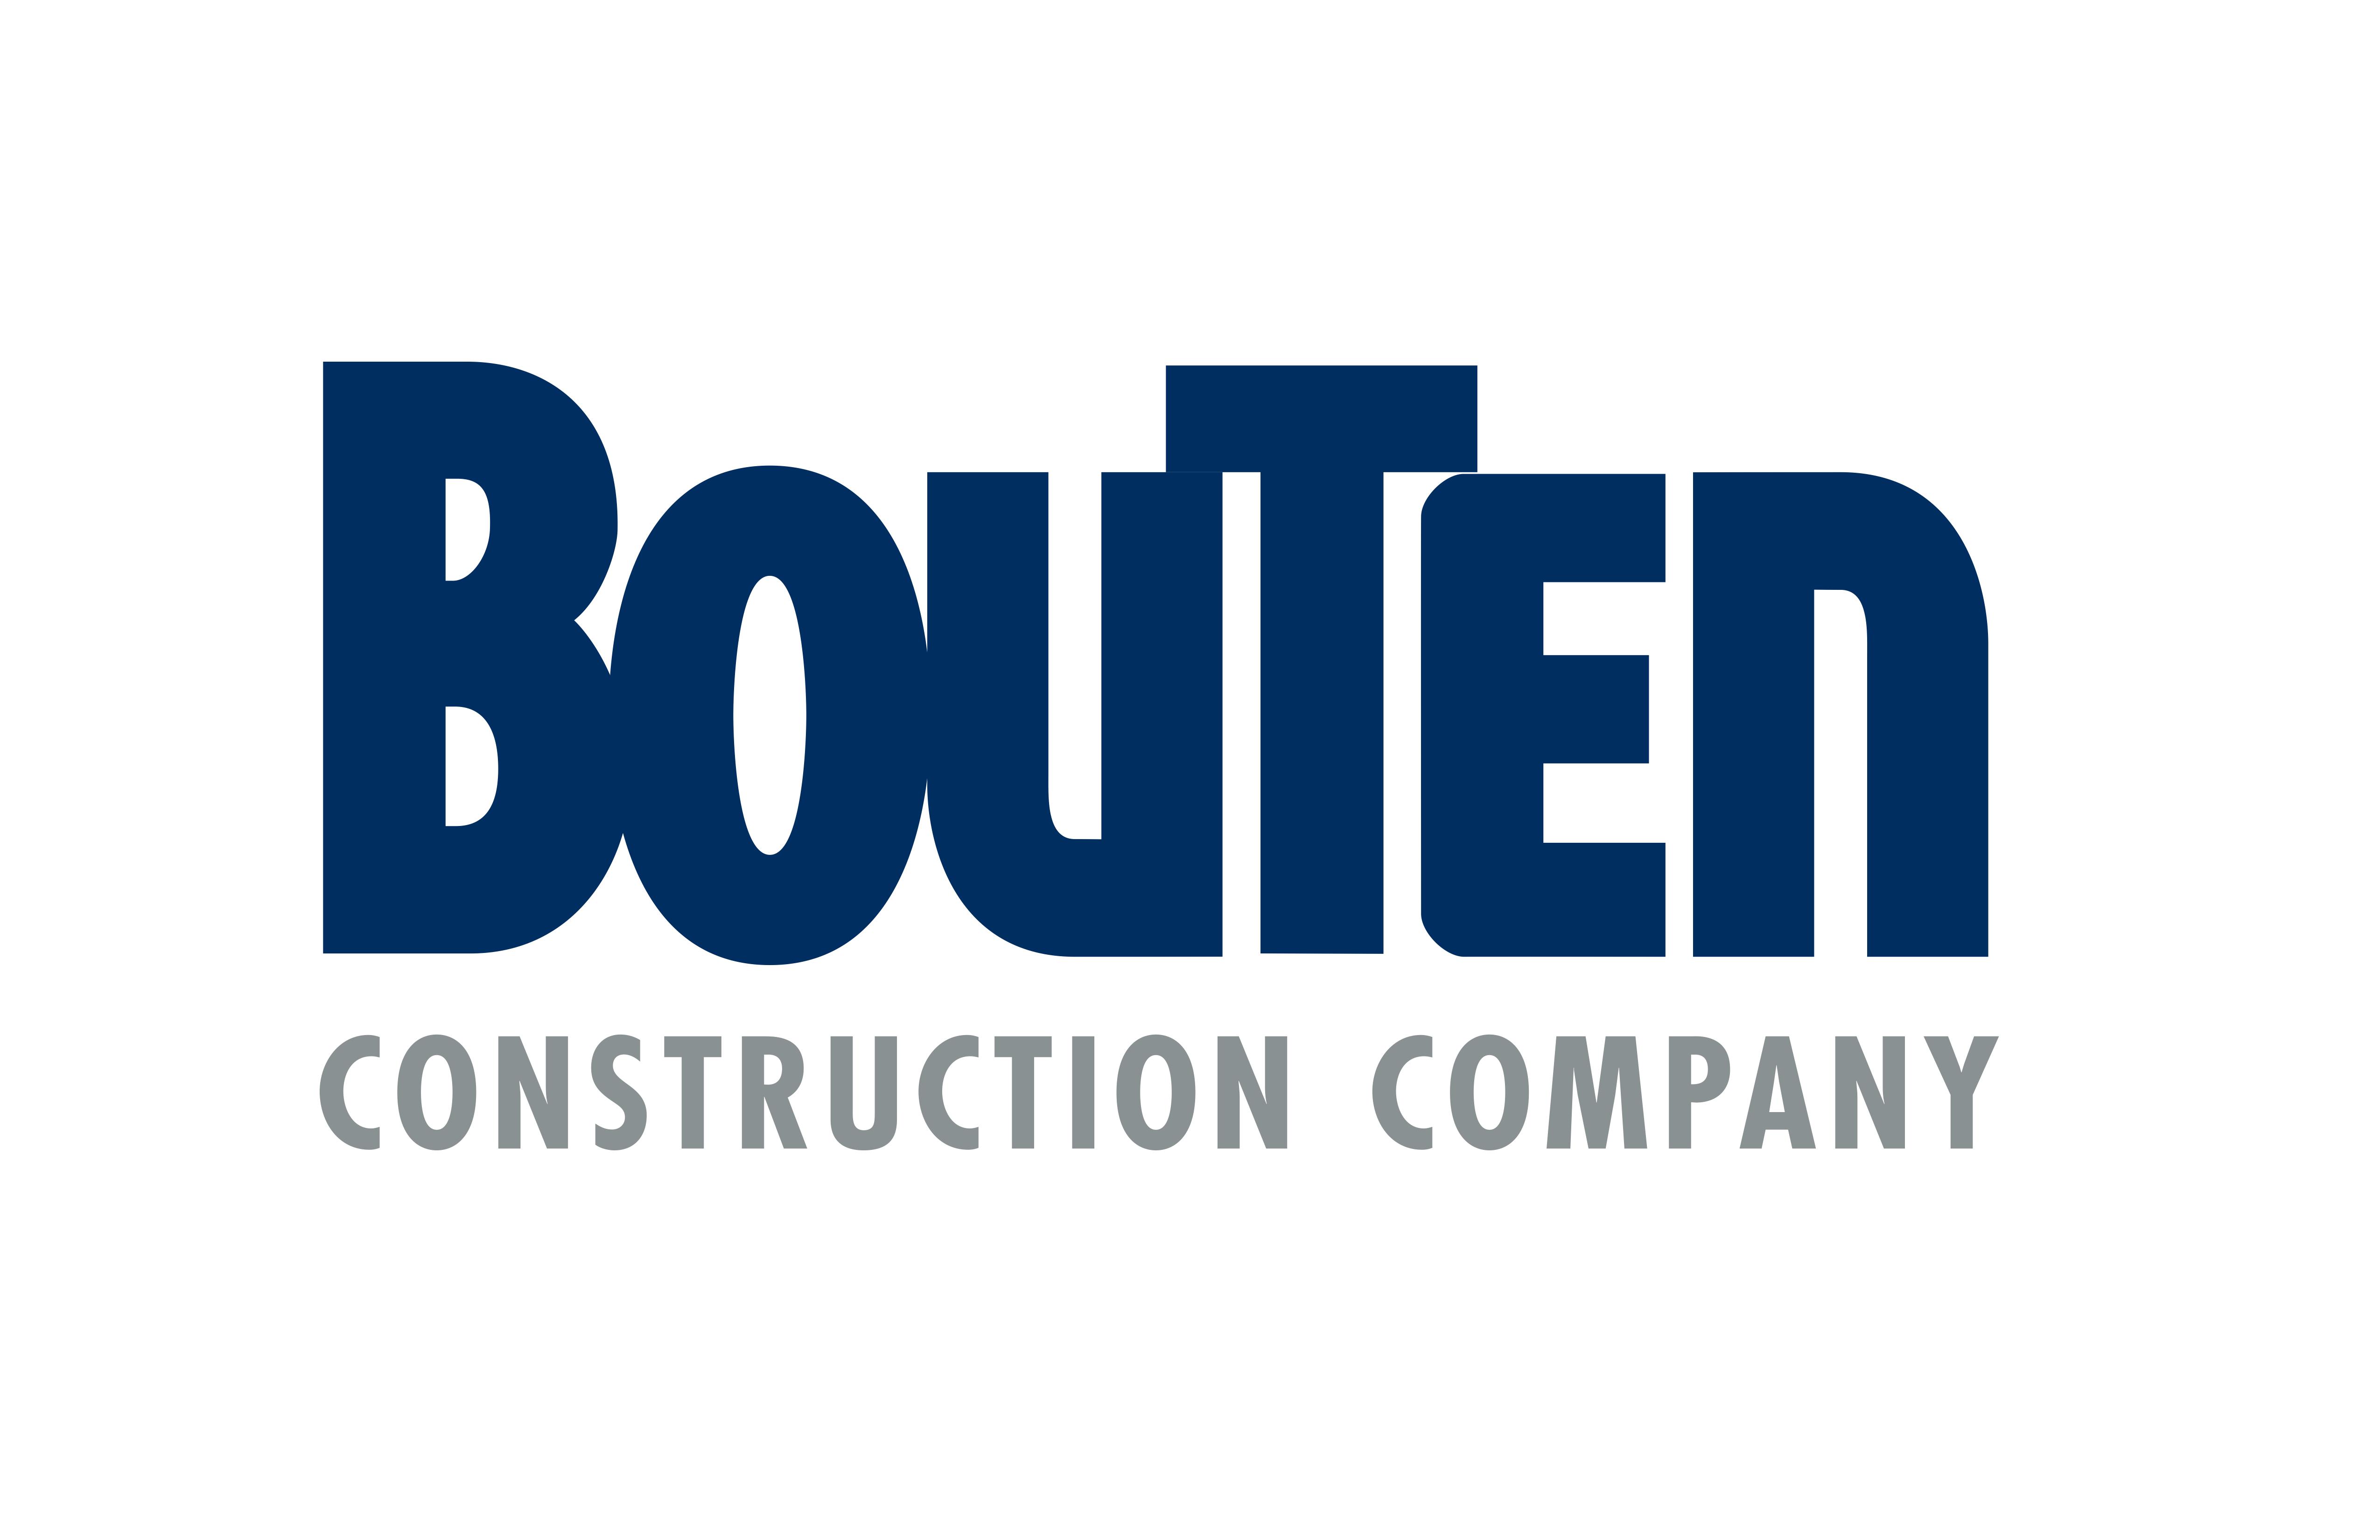 Bouten Construction Company